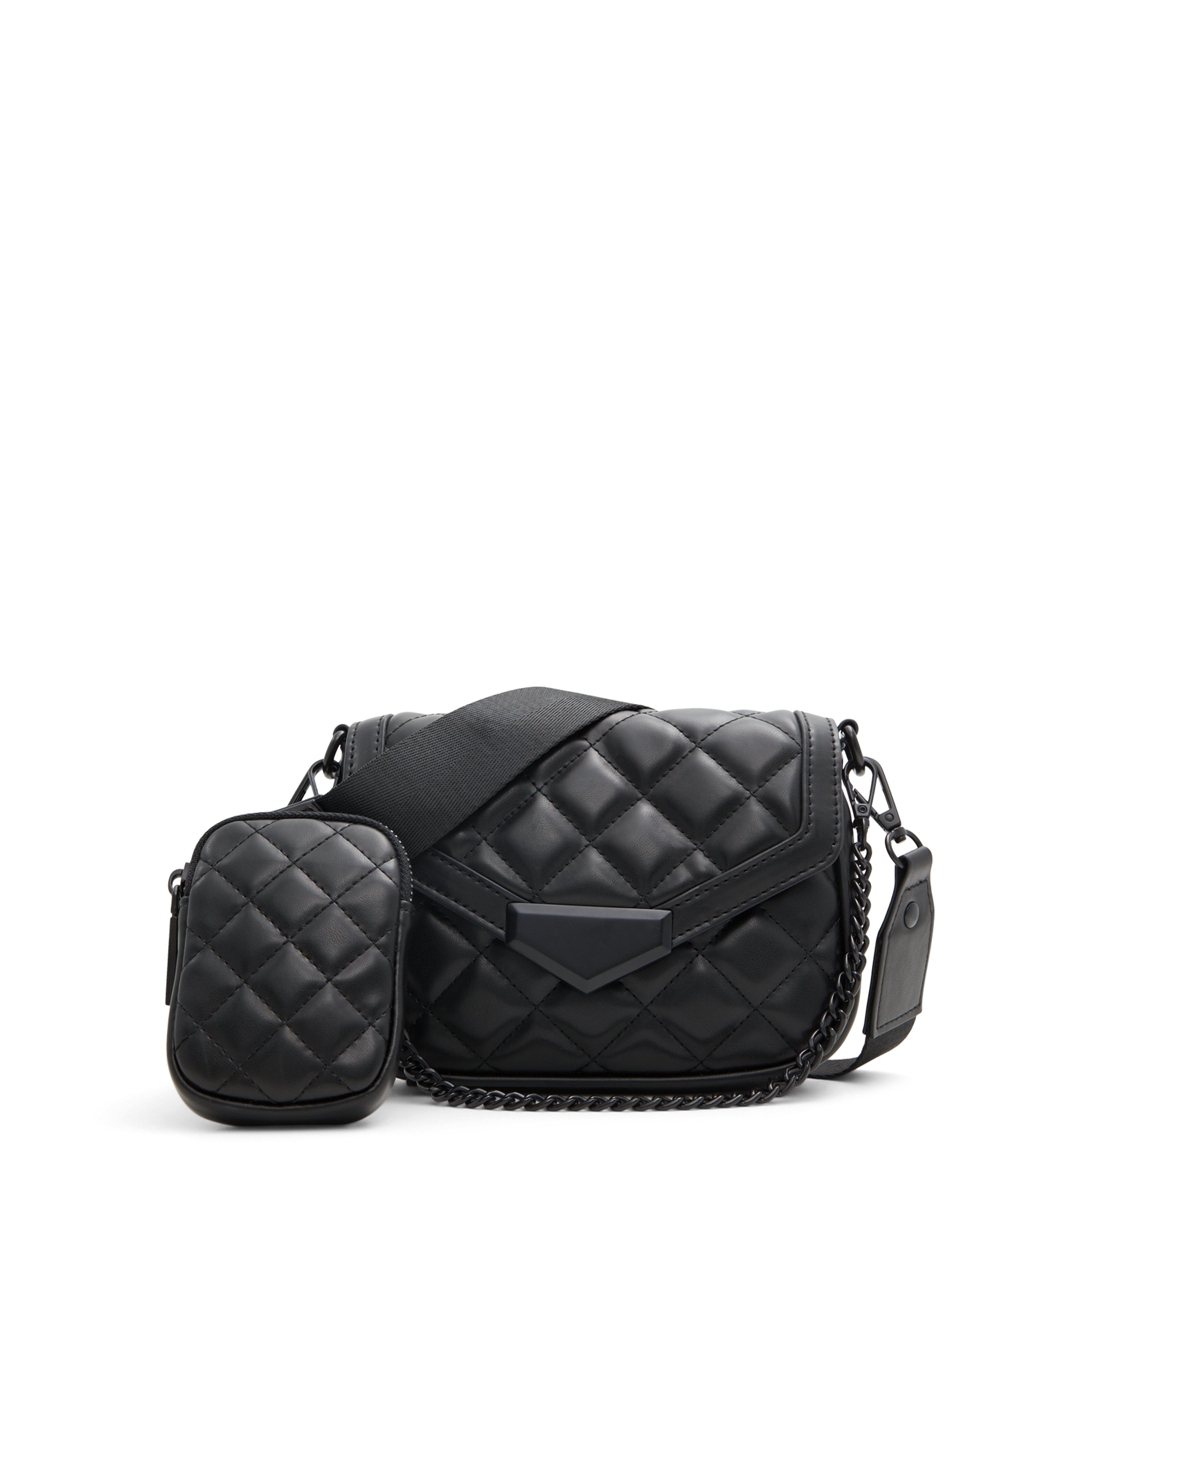 Miraewinx Women's City Handbags - Black, Black